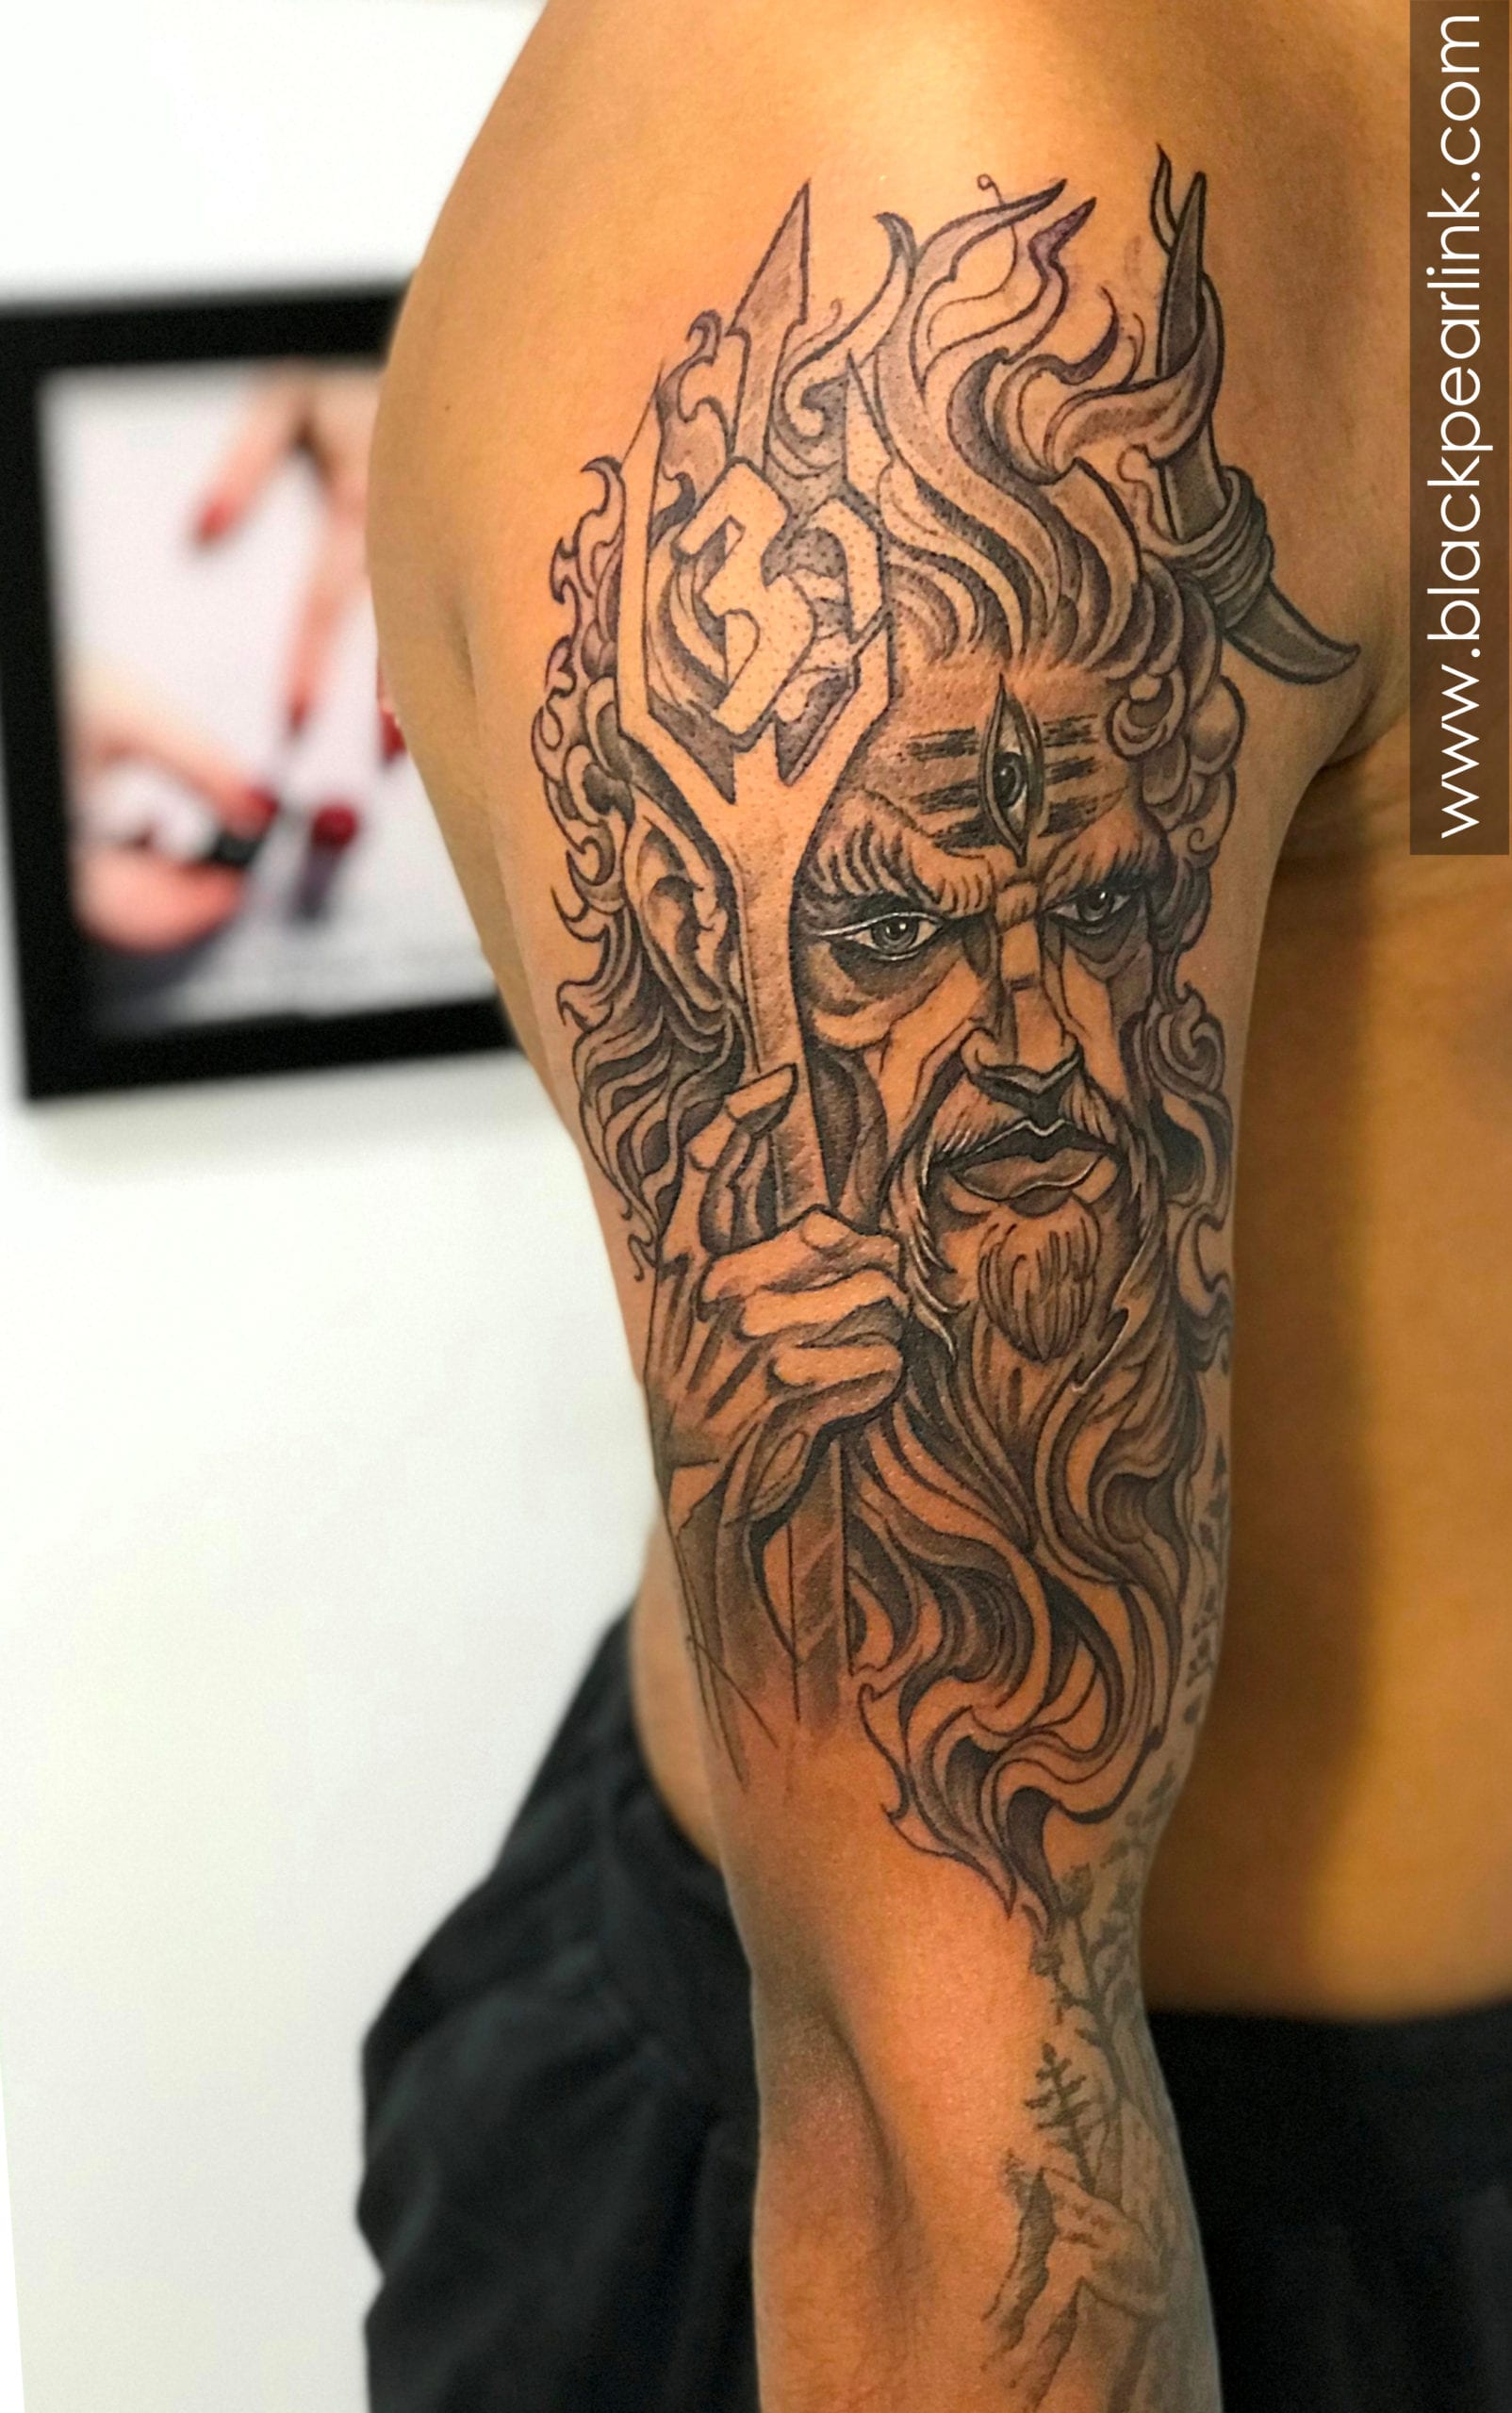 Greek Styled Shiva tattoo with Trident